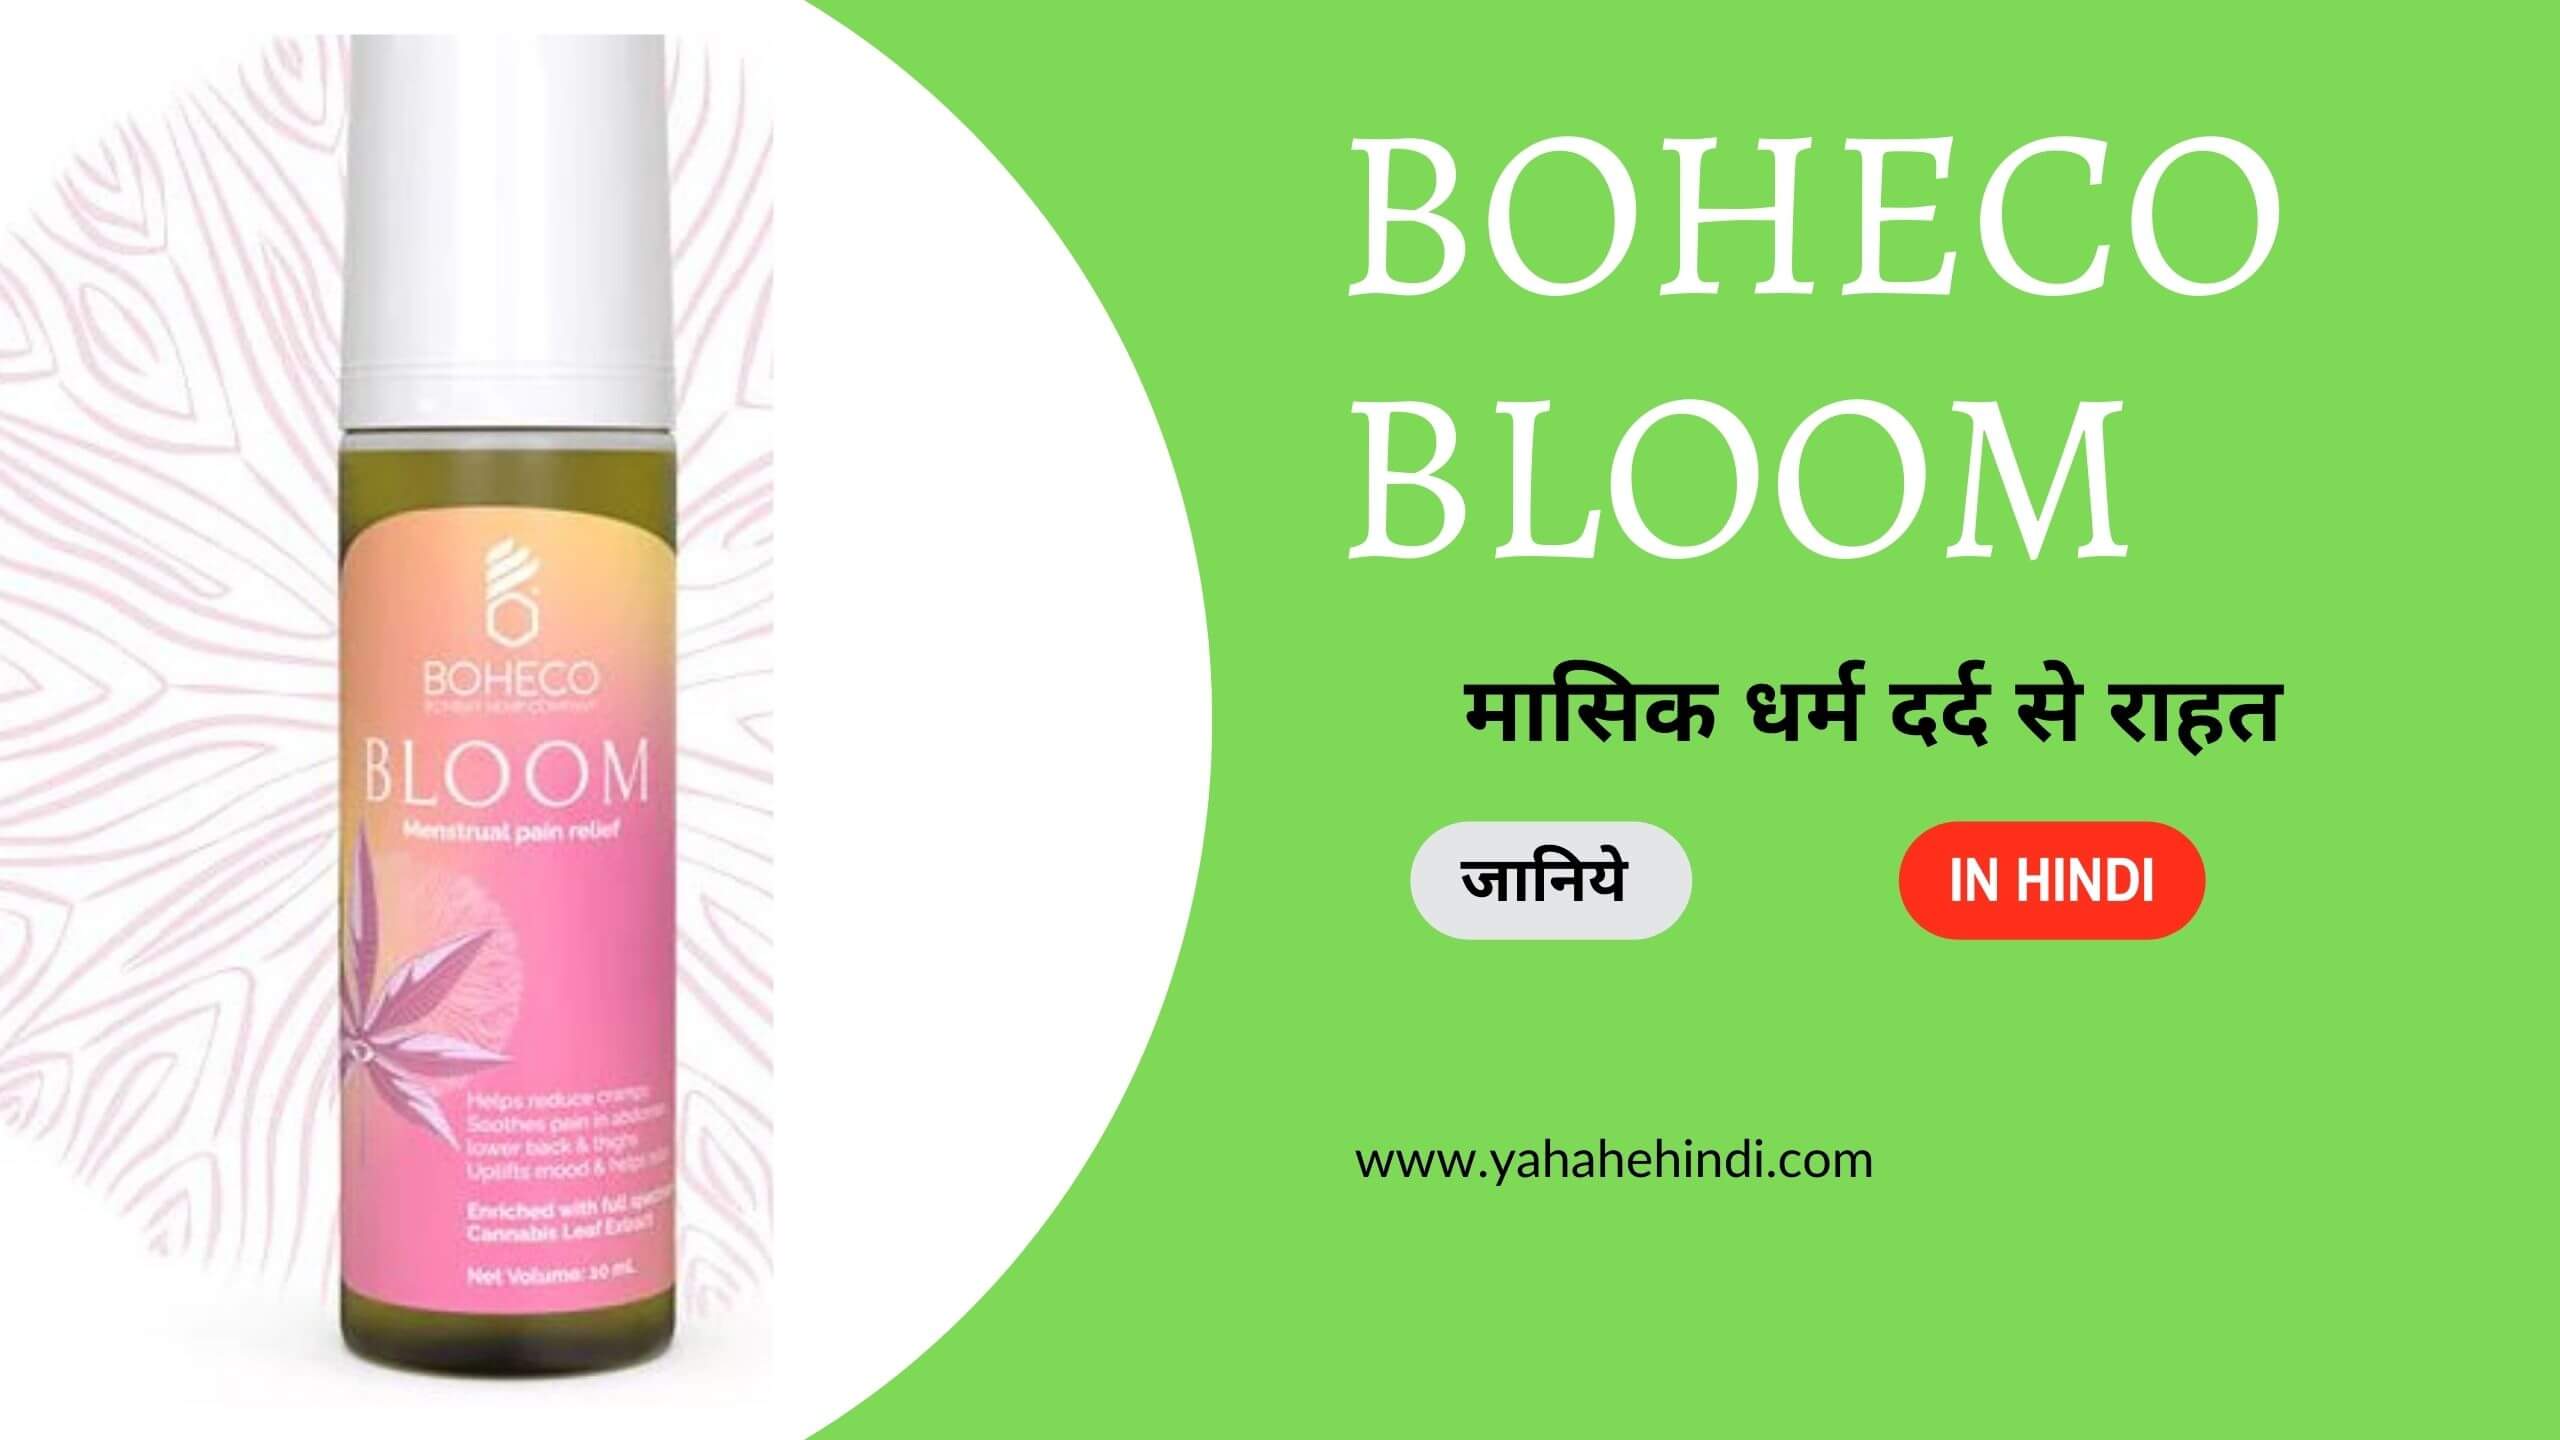 Benefits of boheco bloom in Hindi